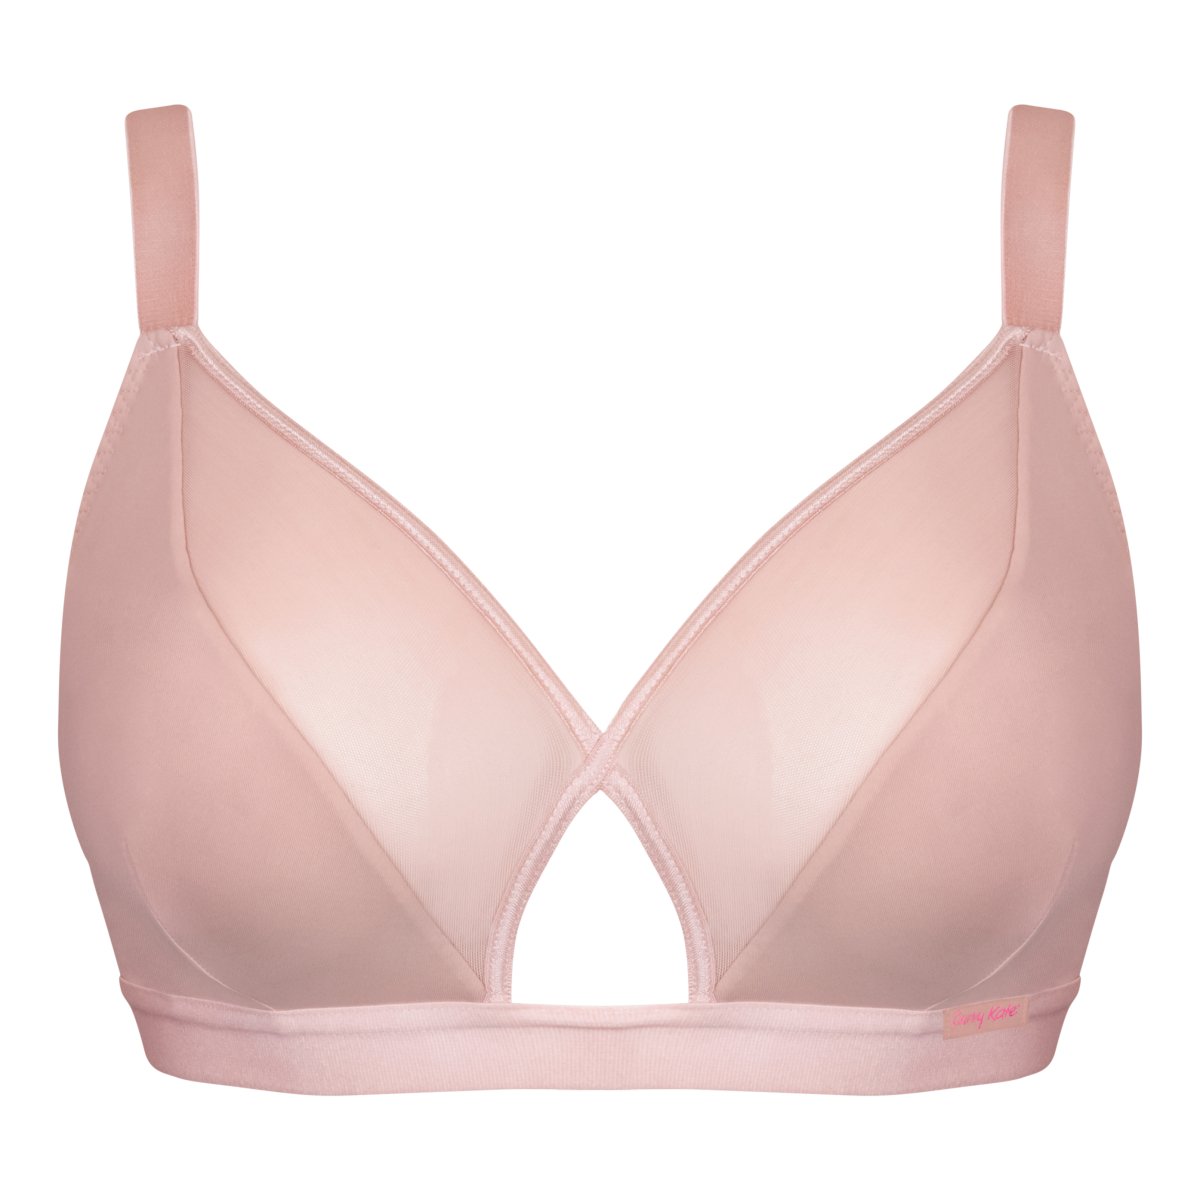 Curvy KateGet Up and Chill Bralette Soft Pink - CK040110Bravo Bra Boutique